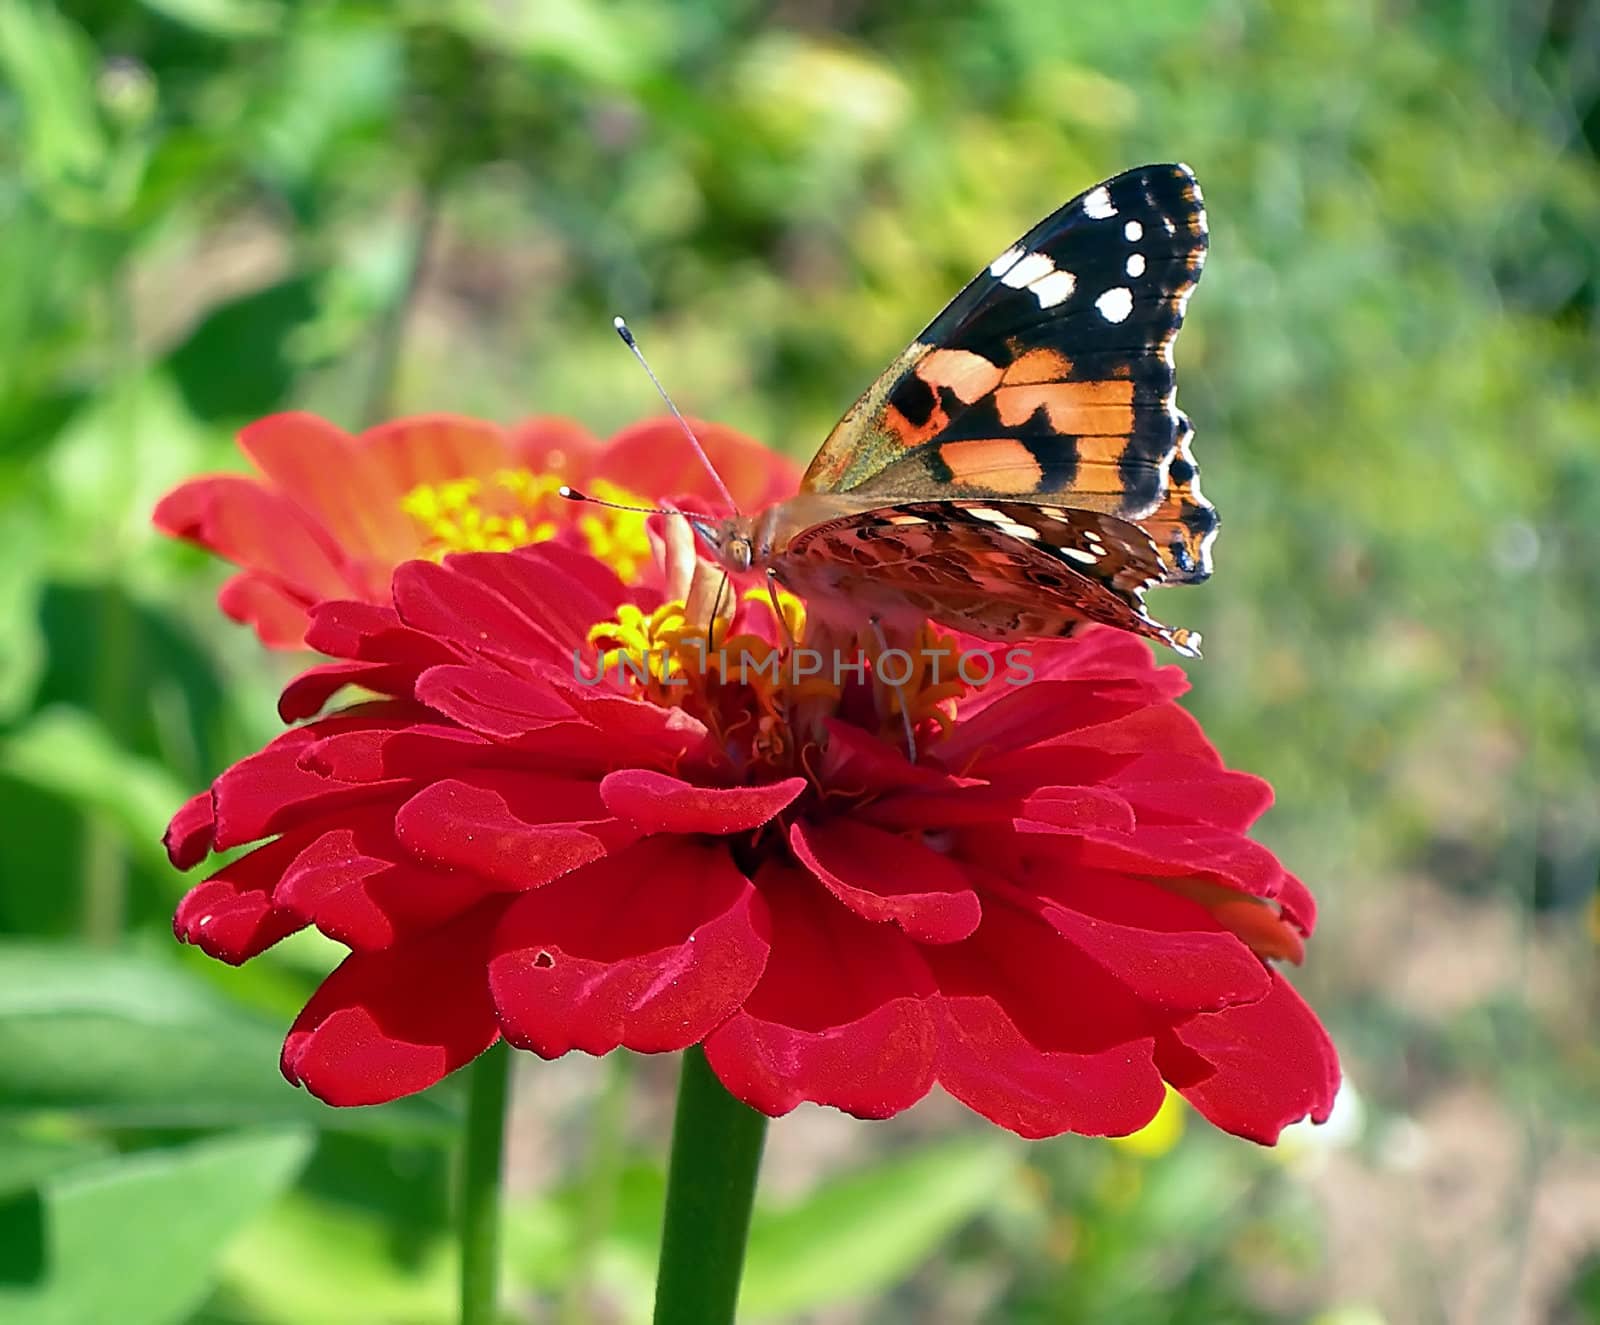 butterfly in the spring garden by drakodav